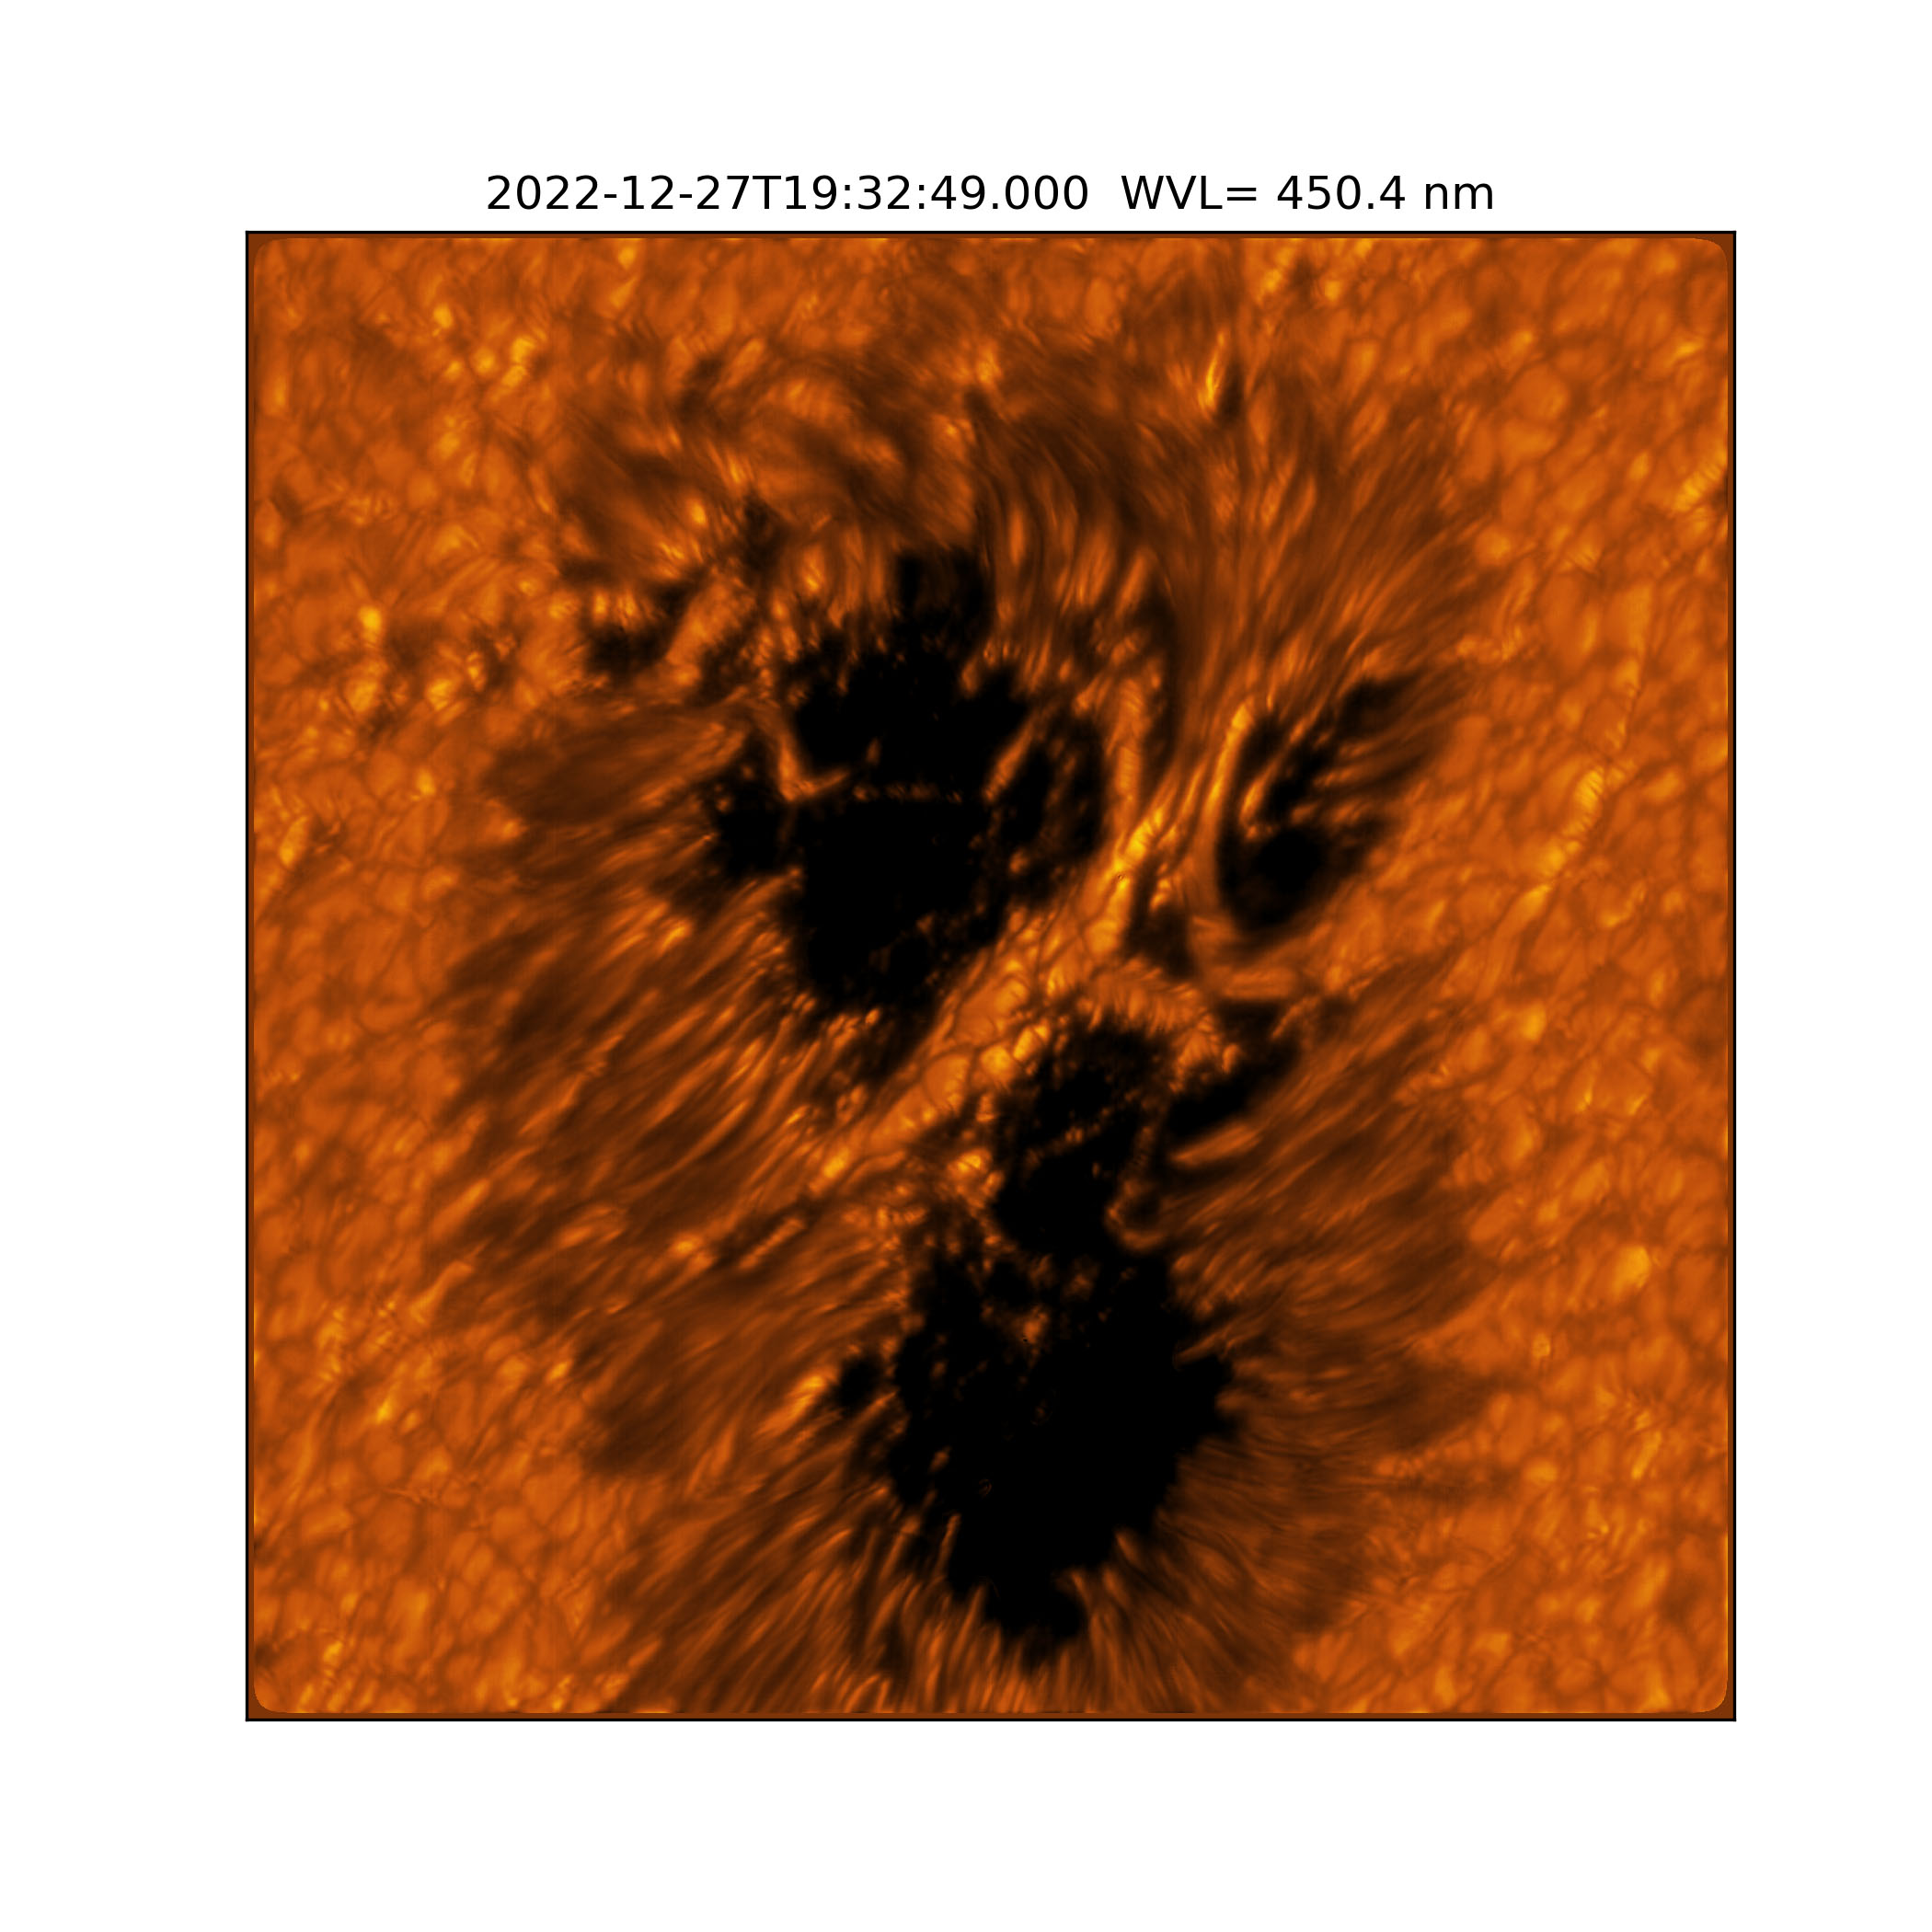 sol nuevas imagenes telescopio inouye atst ics vbiblue dc  vcc xfer 107482 compressed8